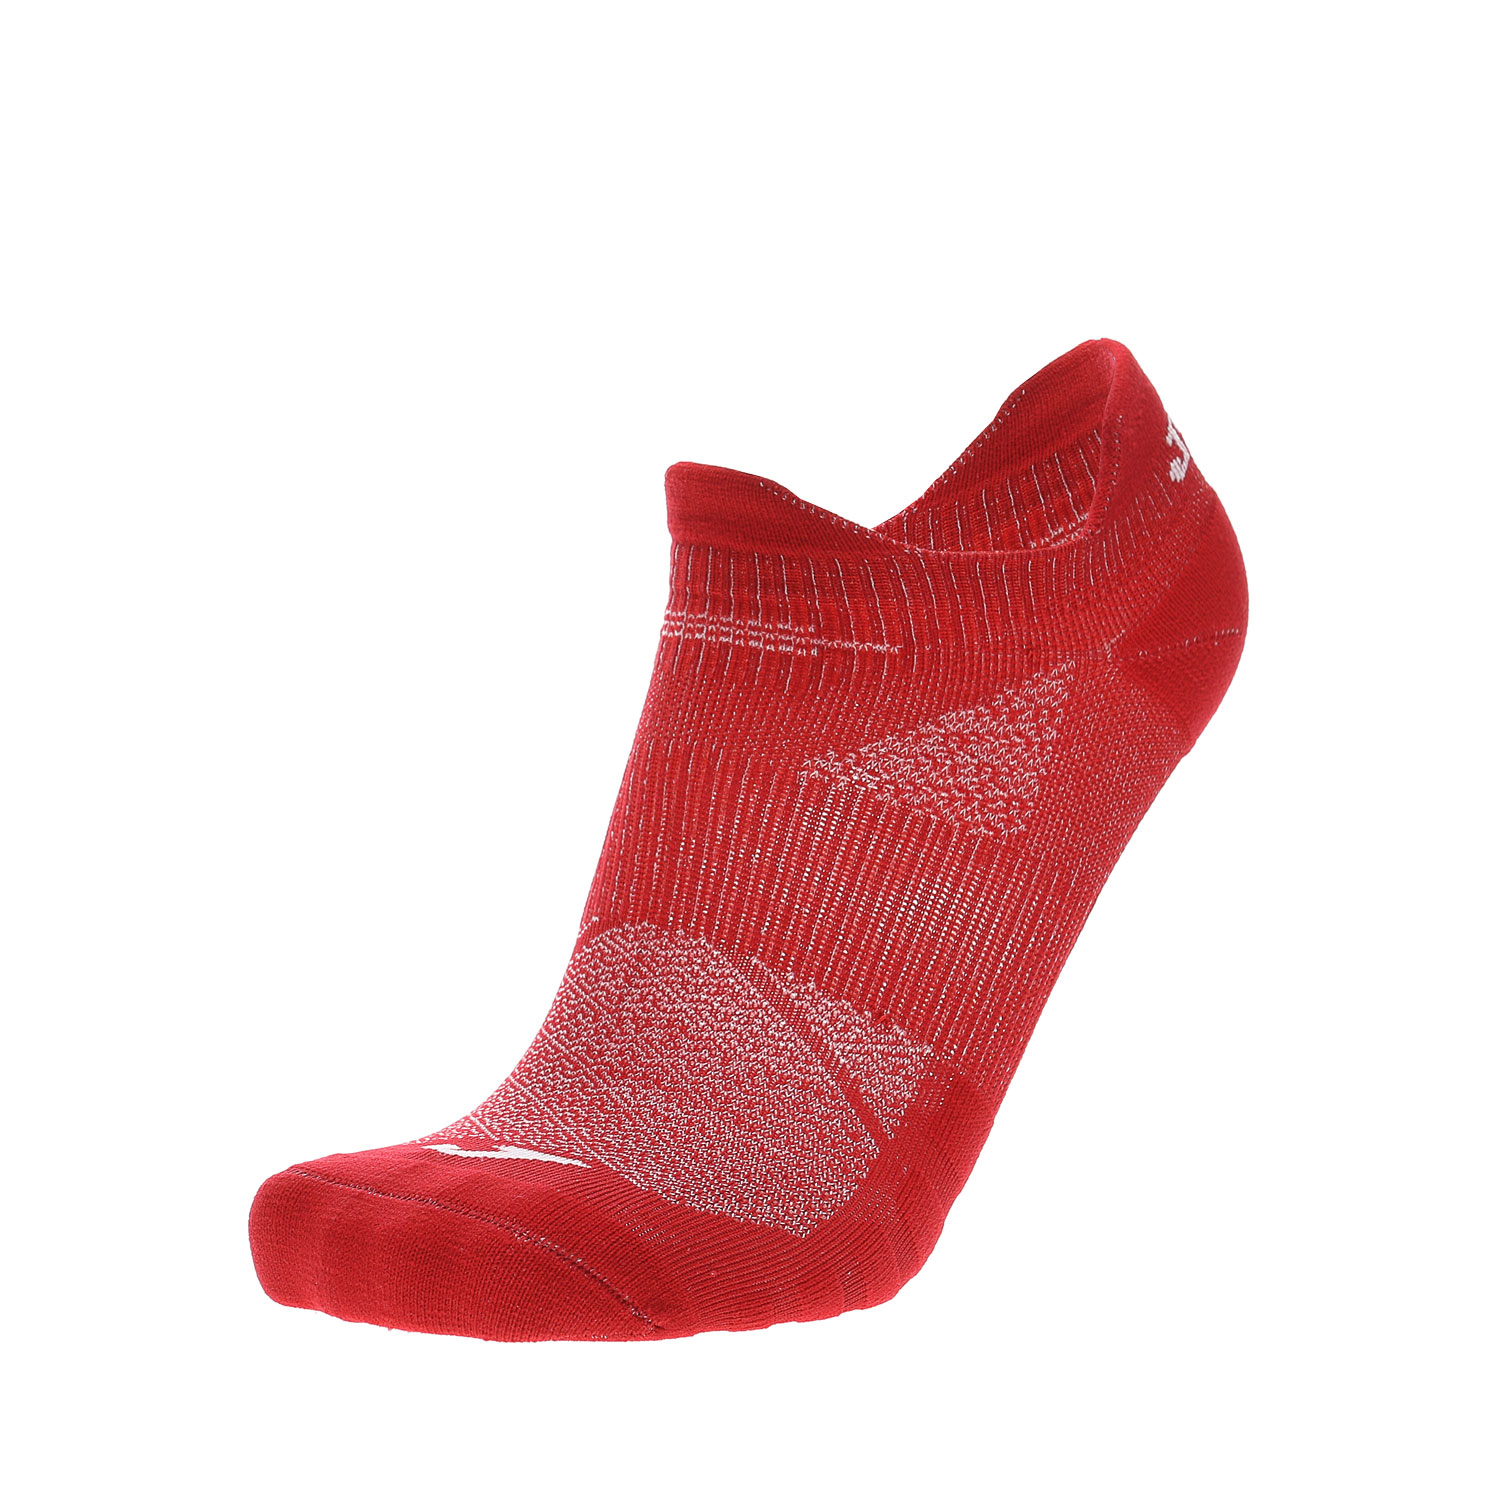 Joma Performance Socks - Red